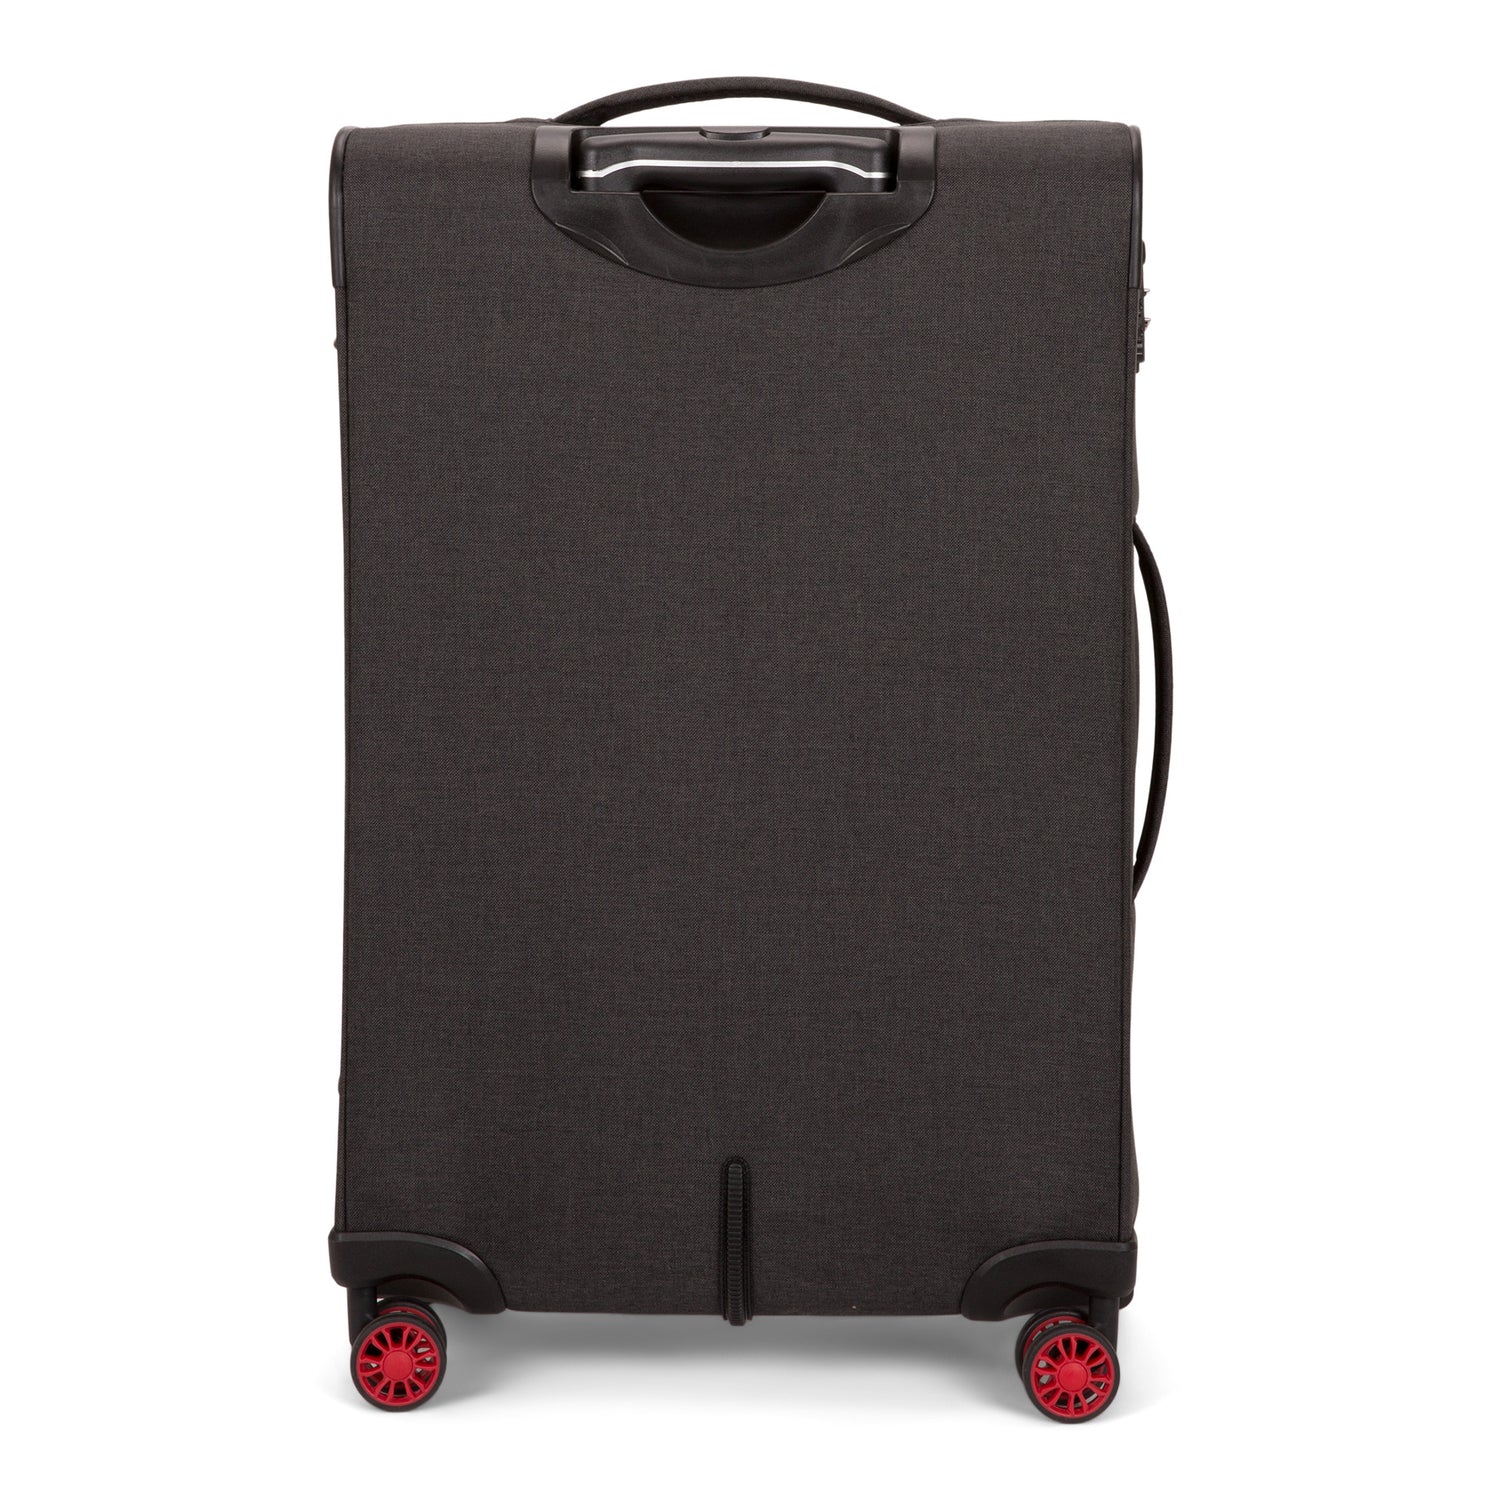 Fusion Softside Luggage Set - Bentley